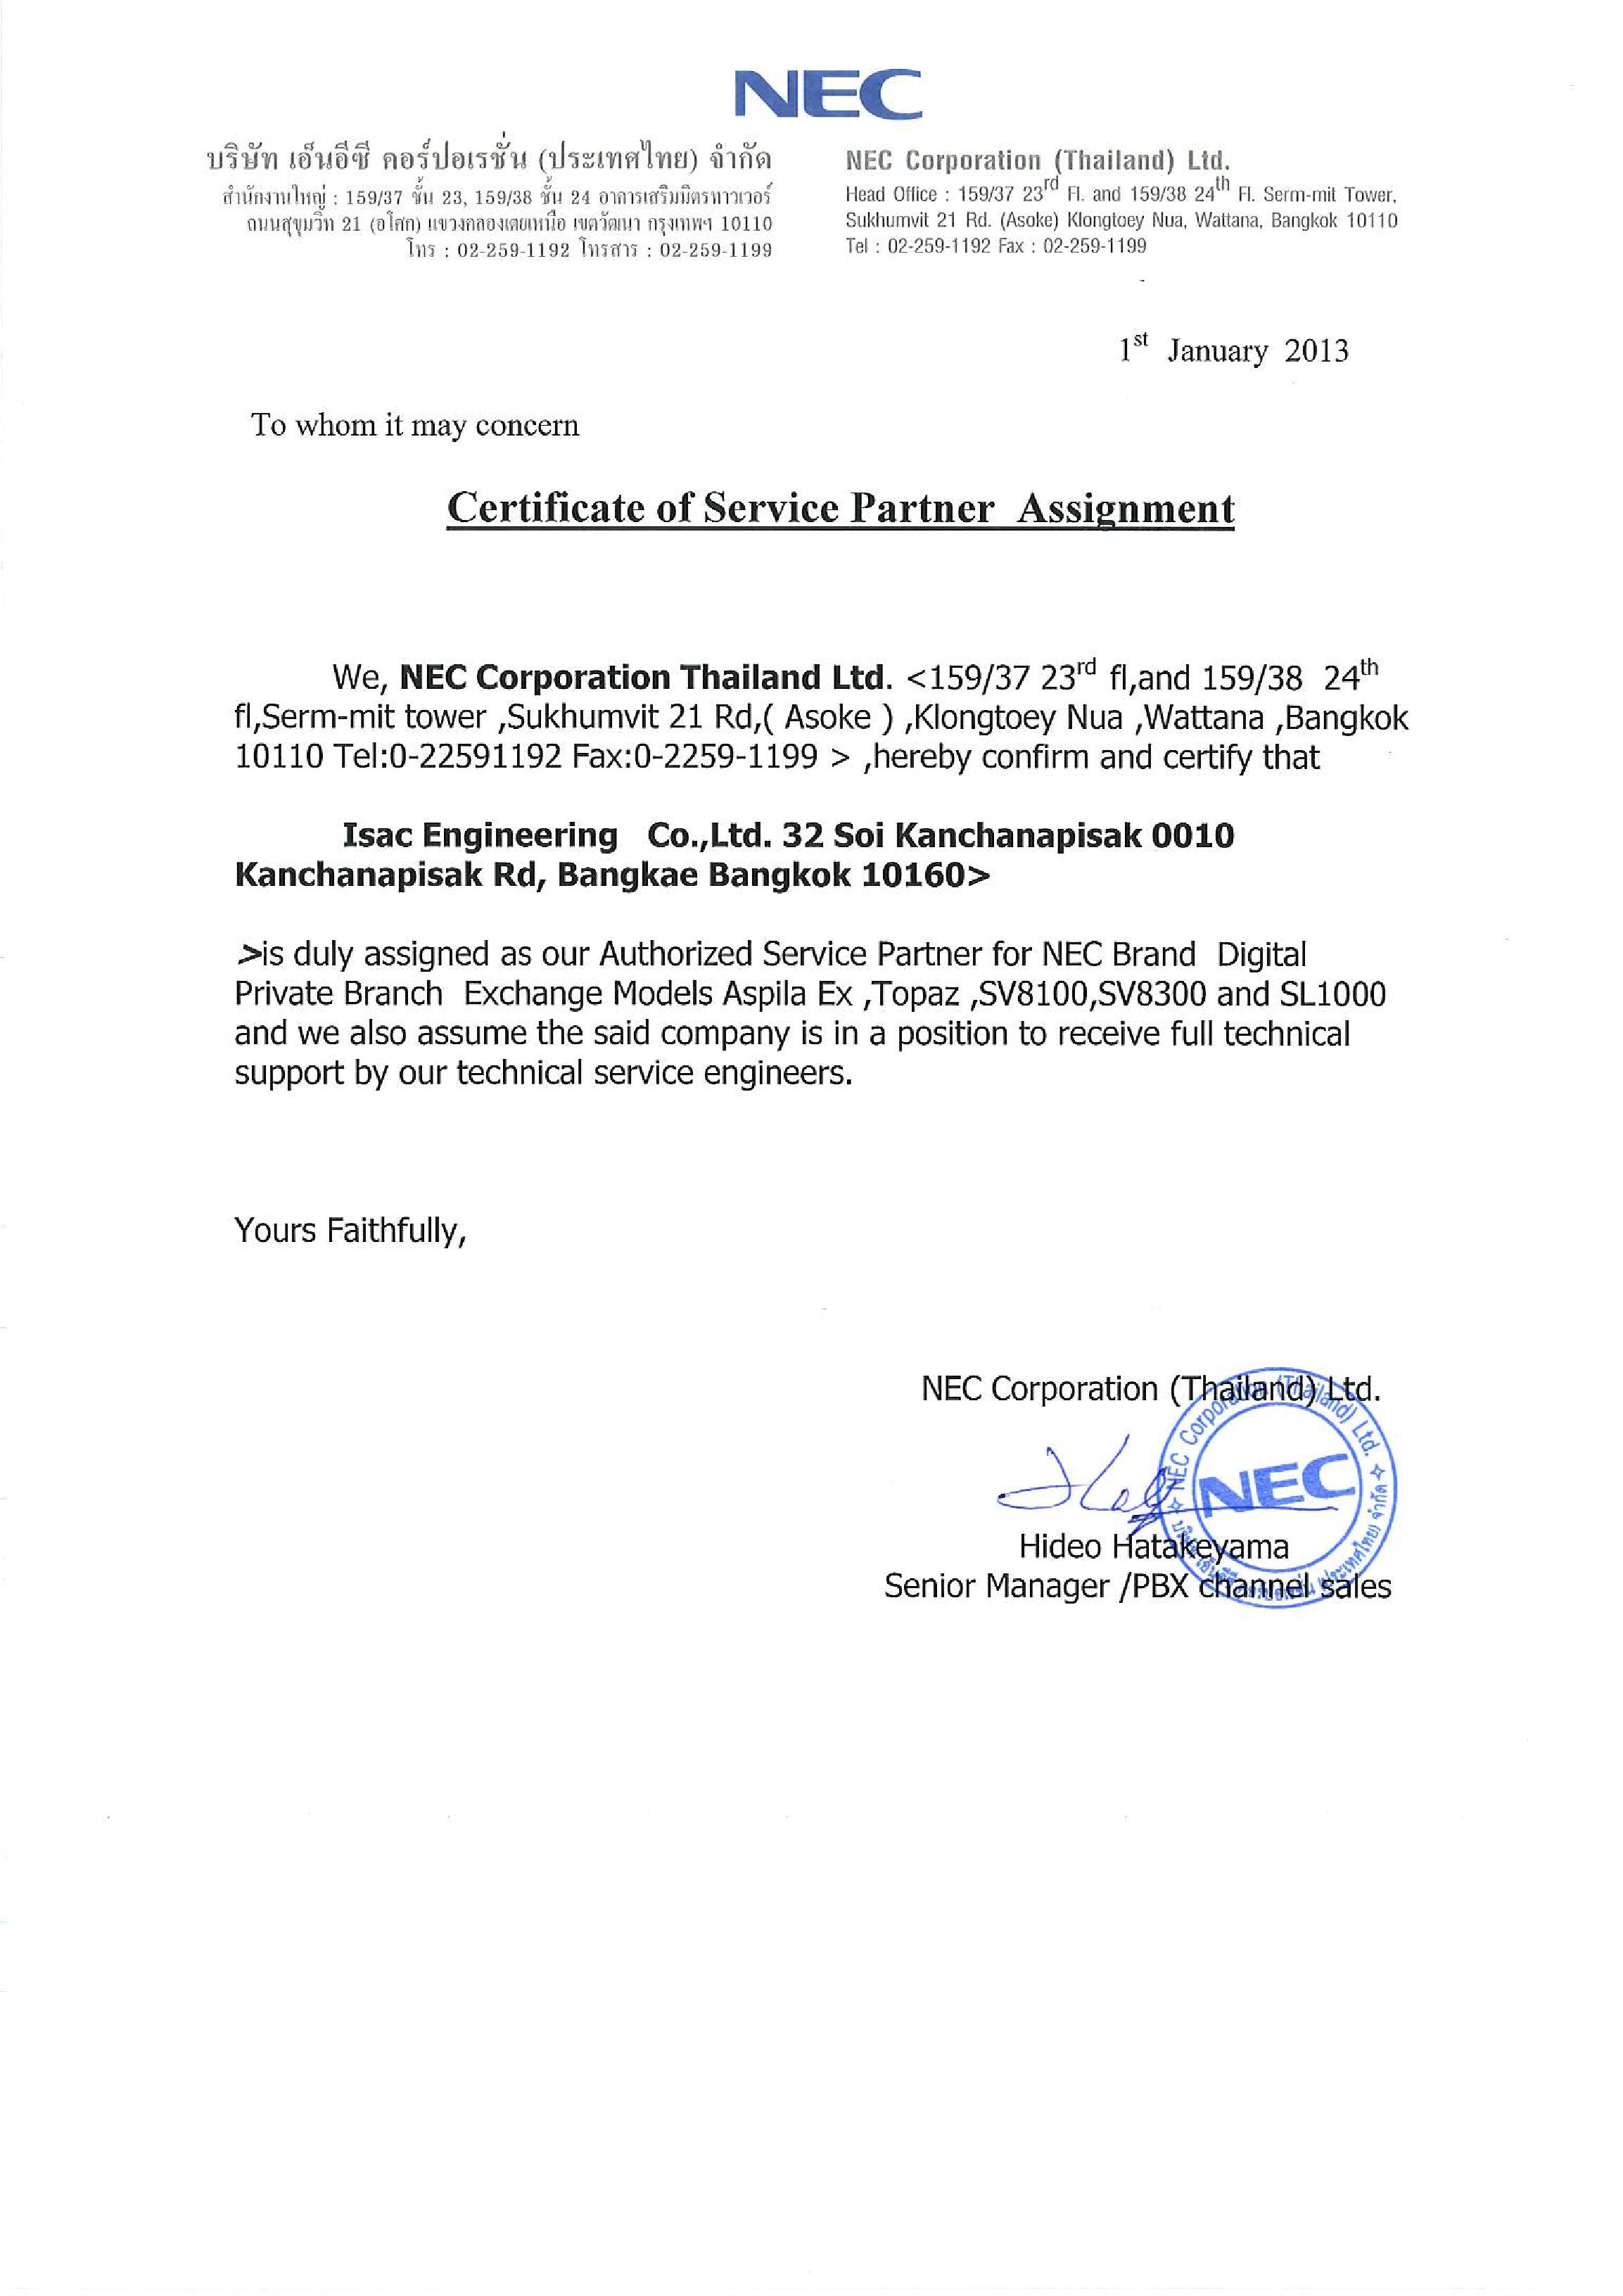 Service_NEC_Certificate_isacengineering_sl1000_sv8100_sv8300_2013